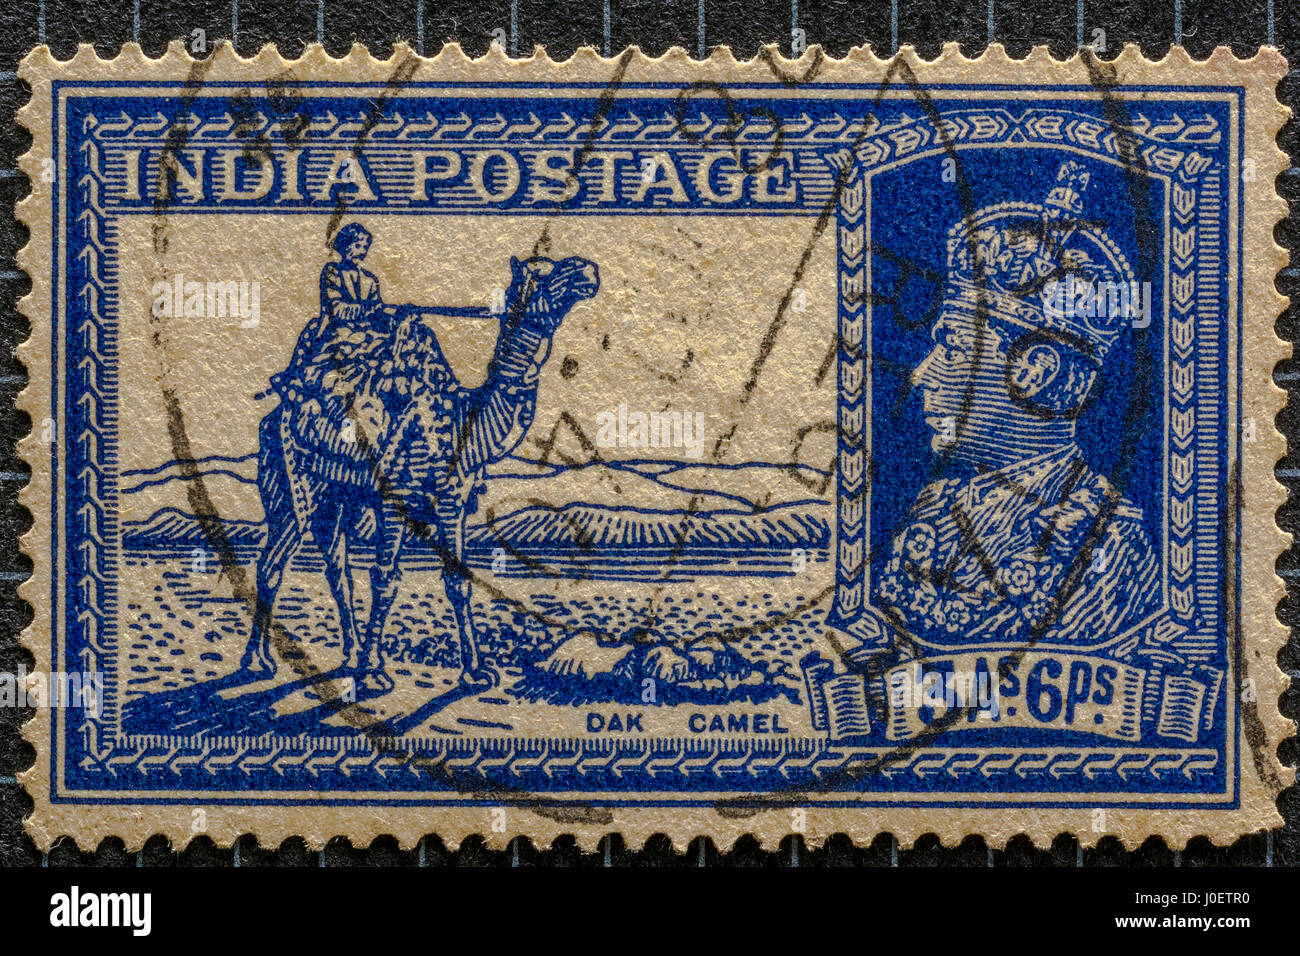 Vecchio trasporto vintage dak camel mail service 3 anna 6 torte, francobolli, India, Asia Foto Stock